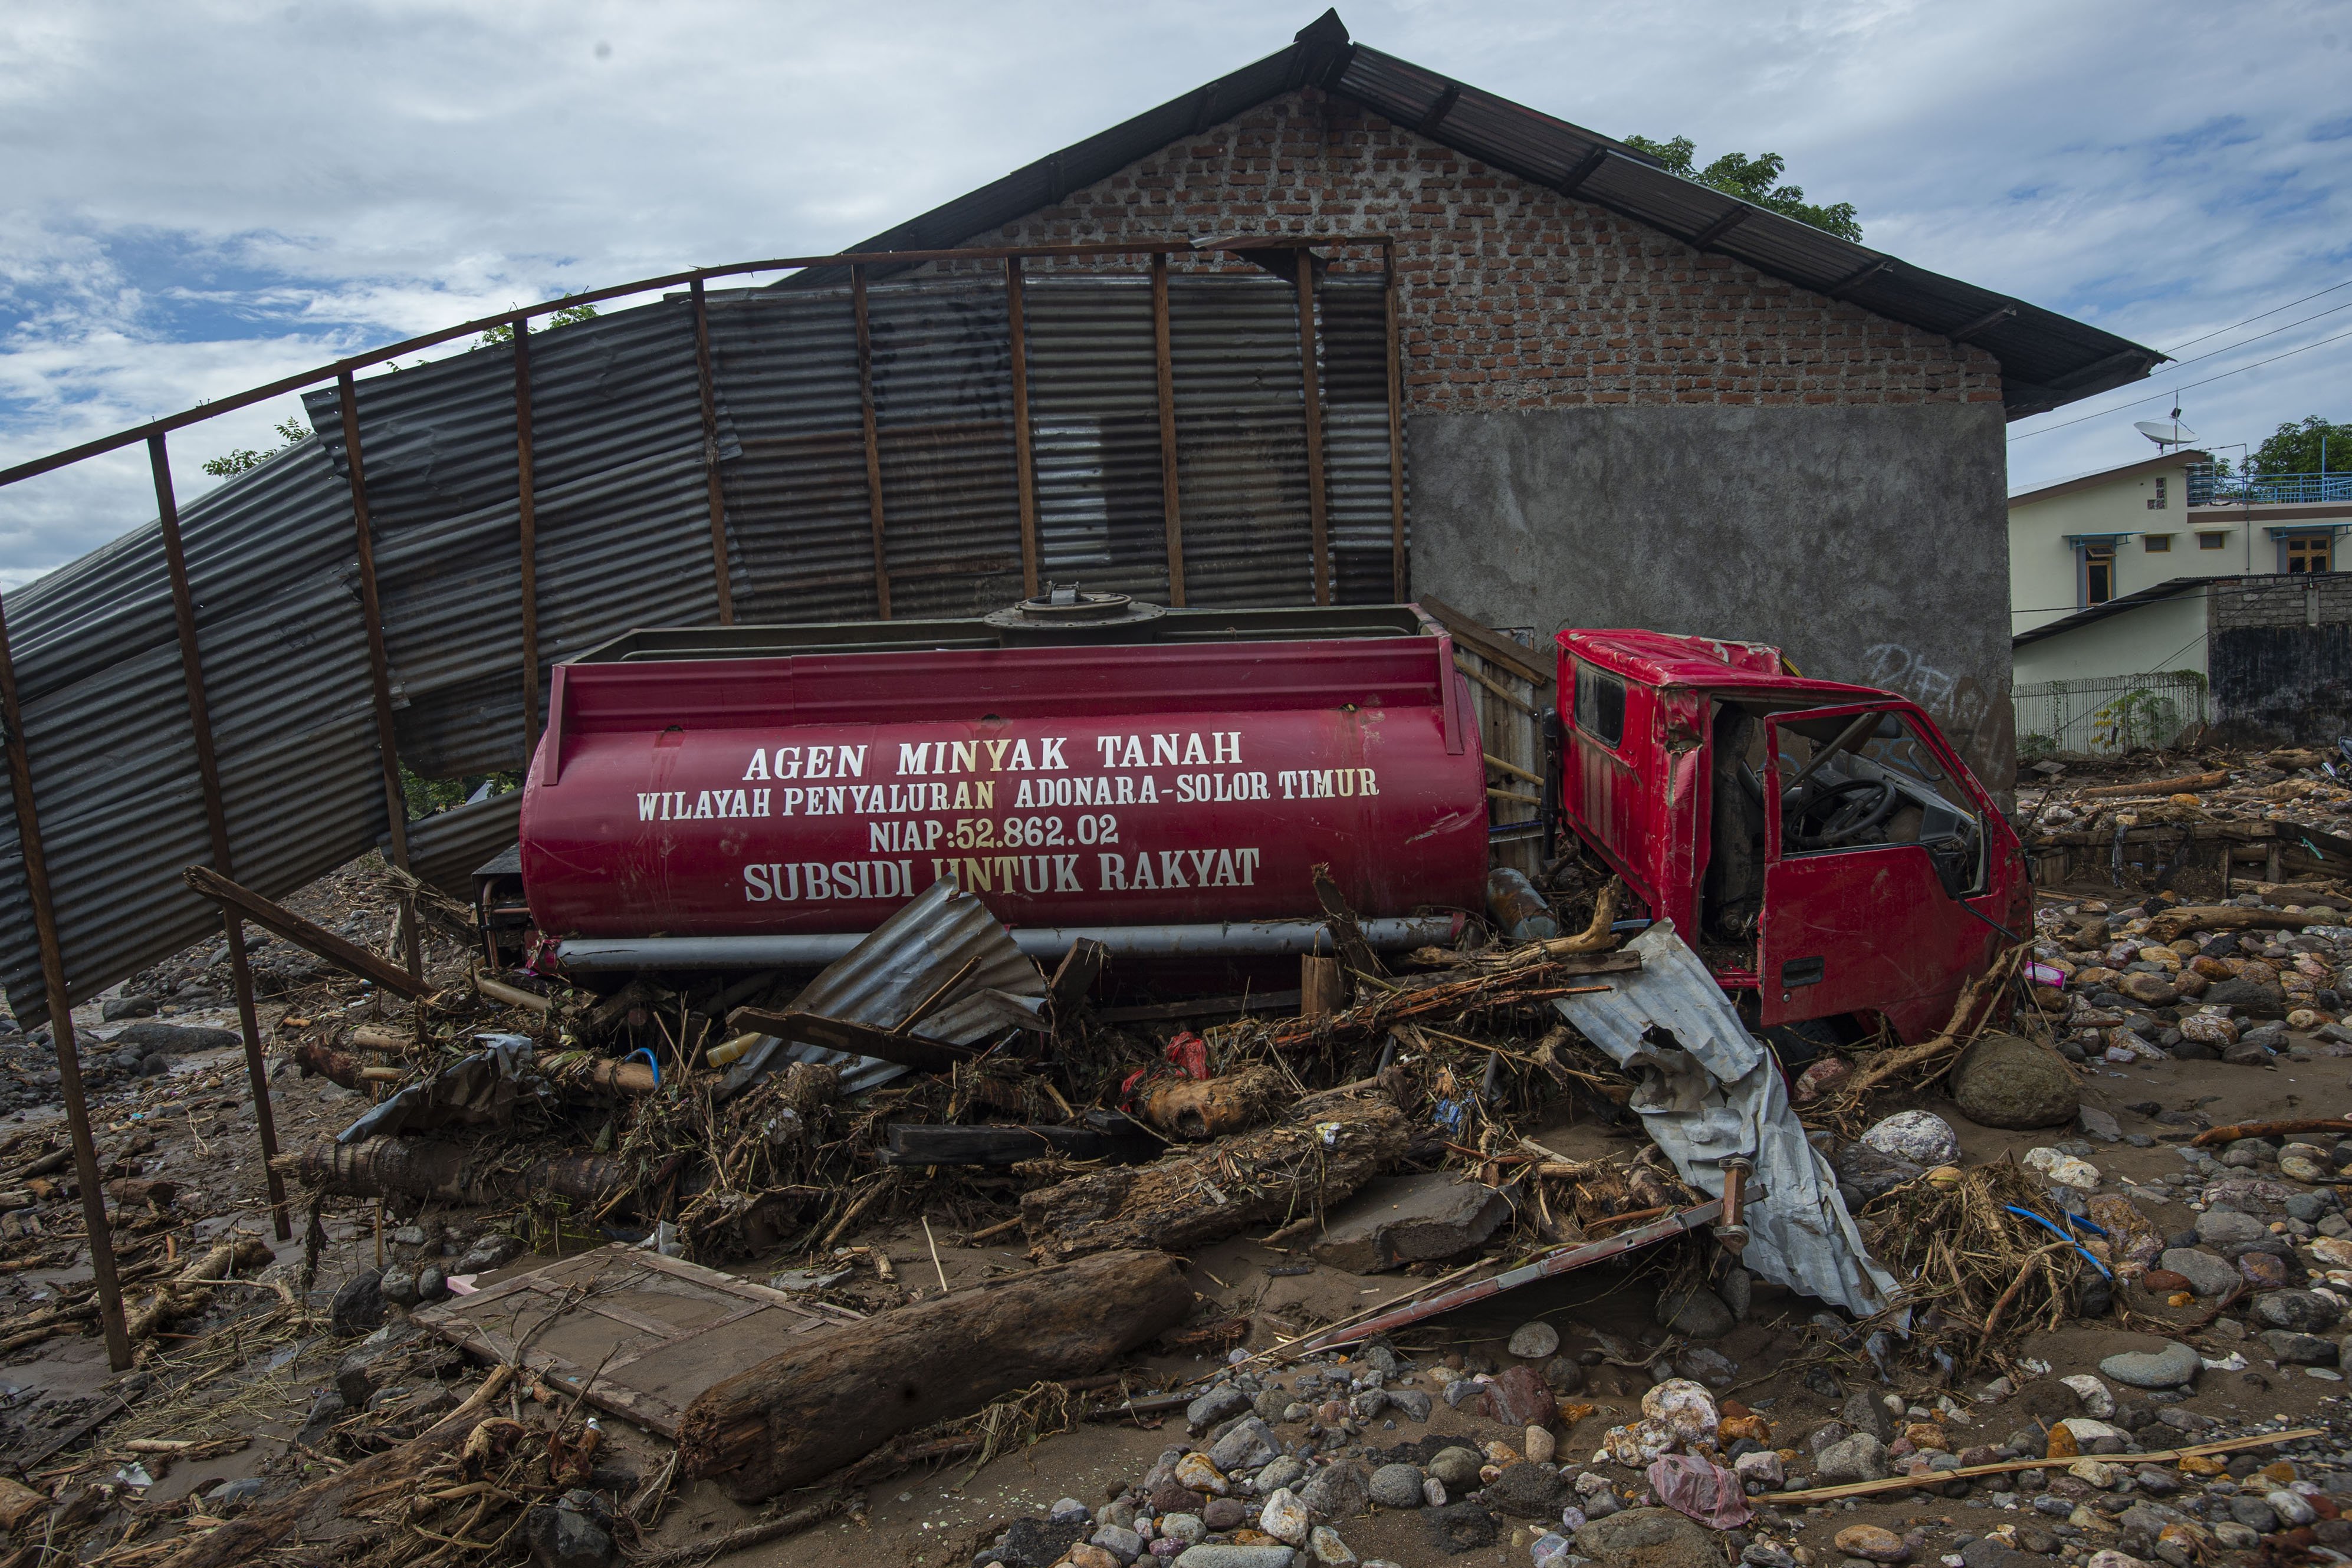 Sebuah truk minyak terdampar di antara puing-puing permukiman yang hancur akibat banjir bandang di Weiwerang, Adonara Timur, Kabupaten Flores Timur, Nusa Tenggara Timur (NTT).